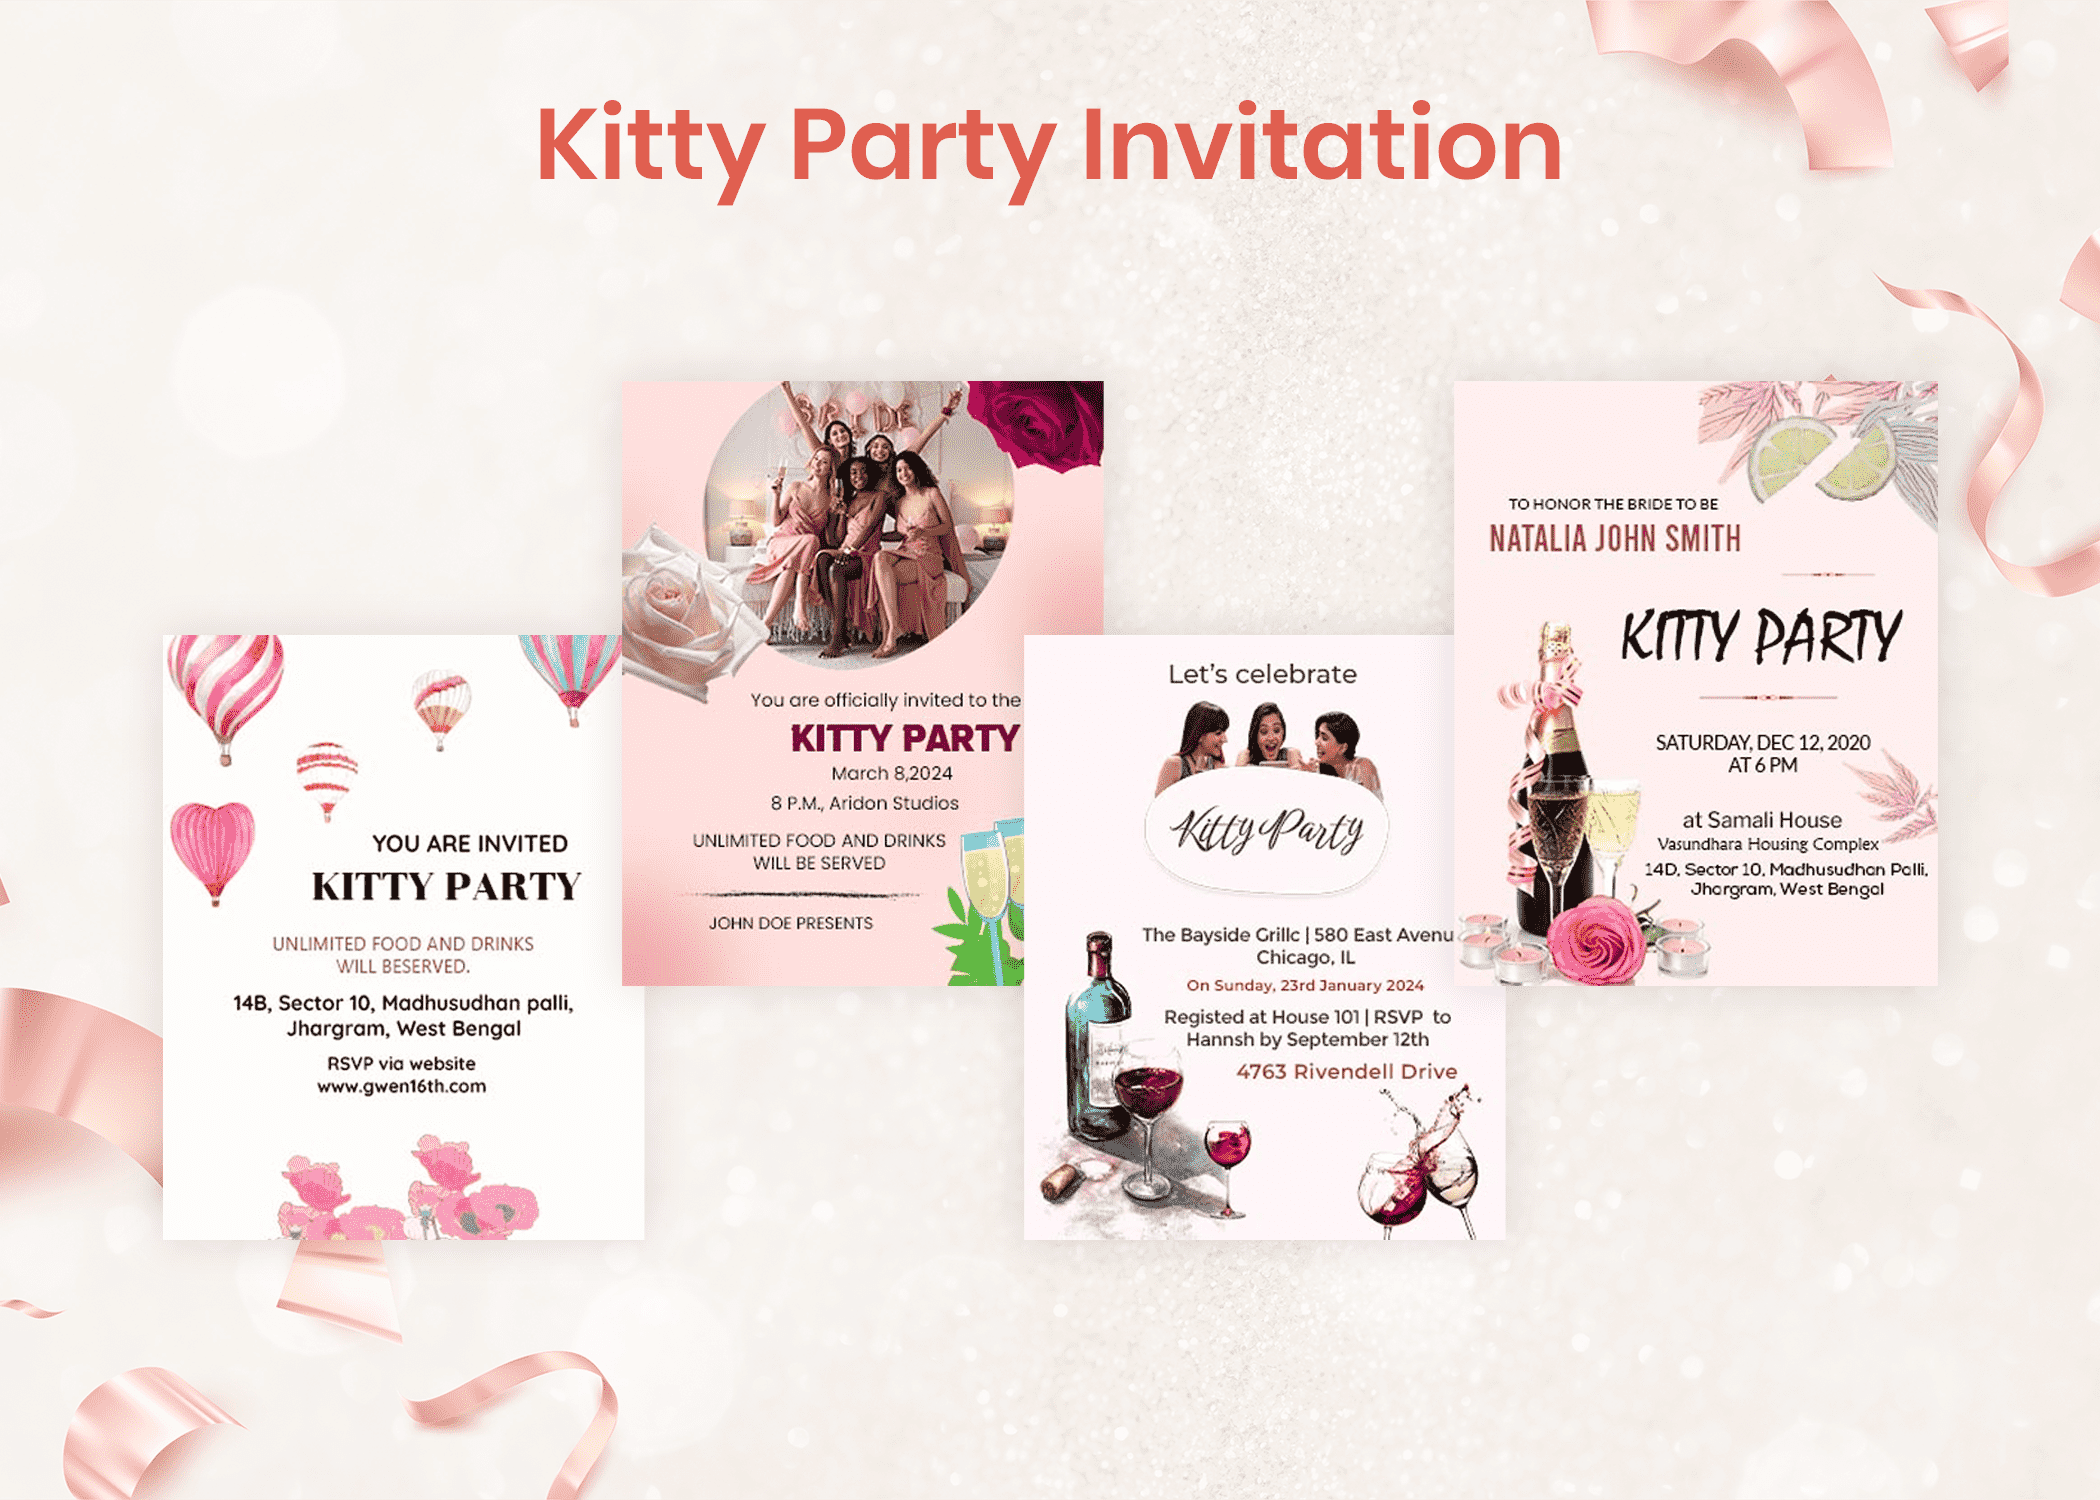 Kitty Party: Where Fun Meets Friendship